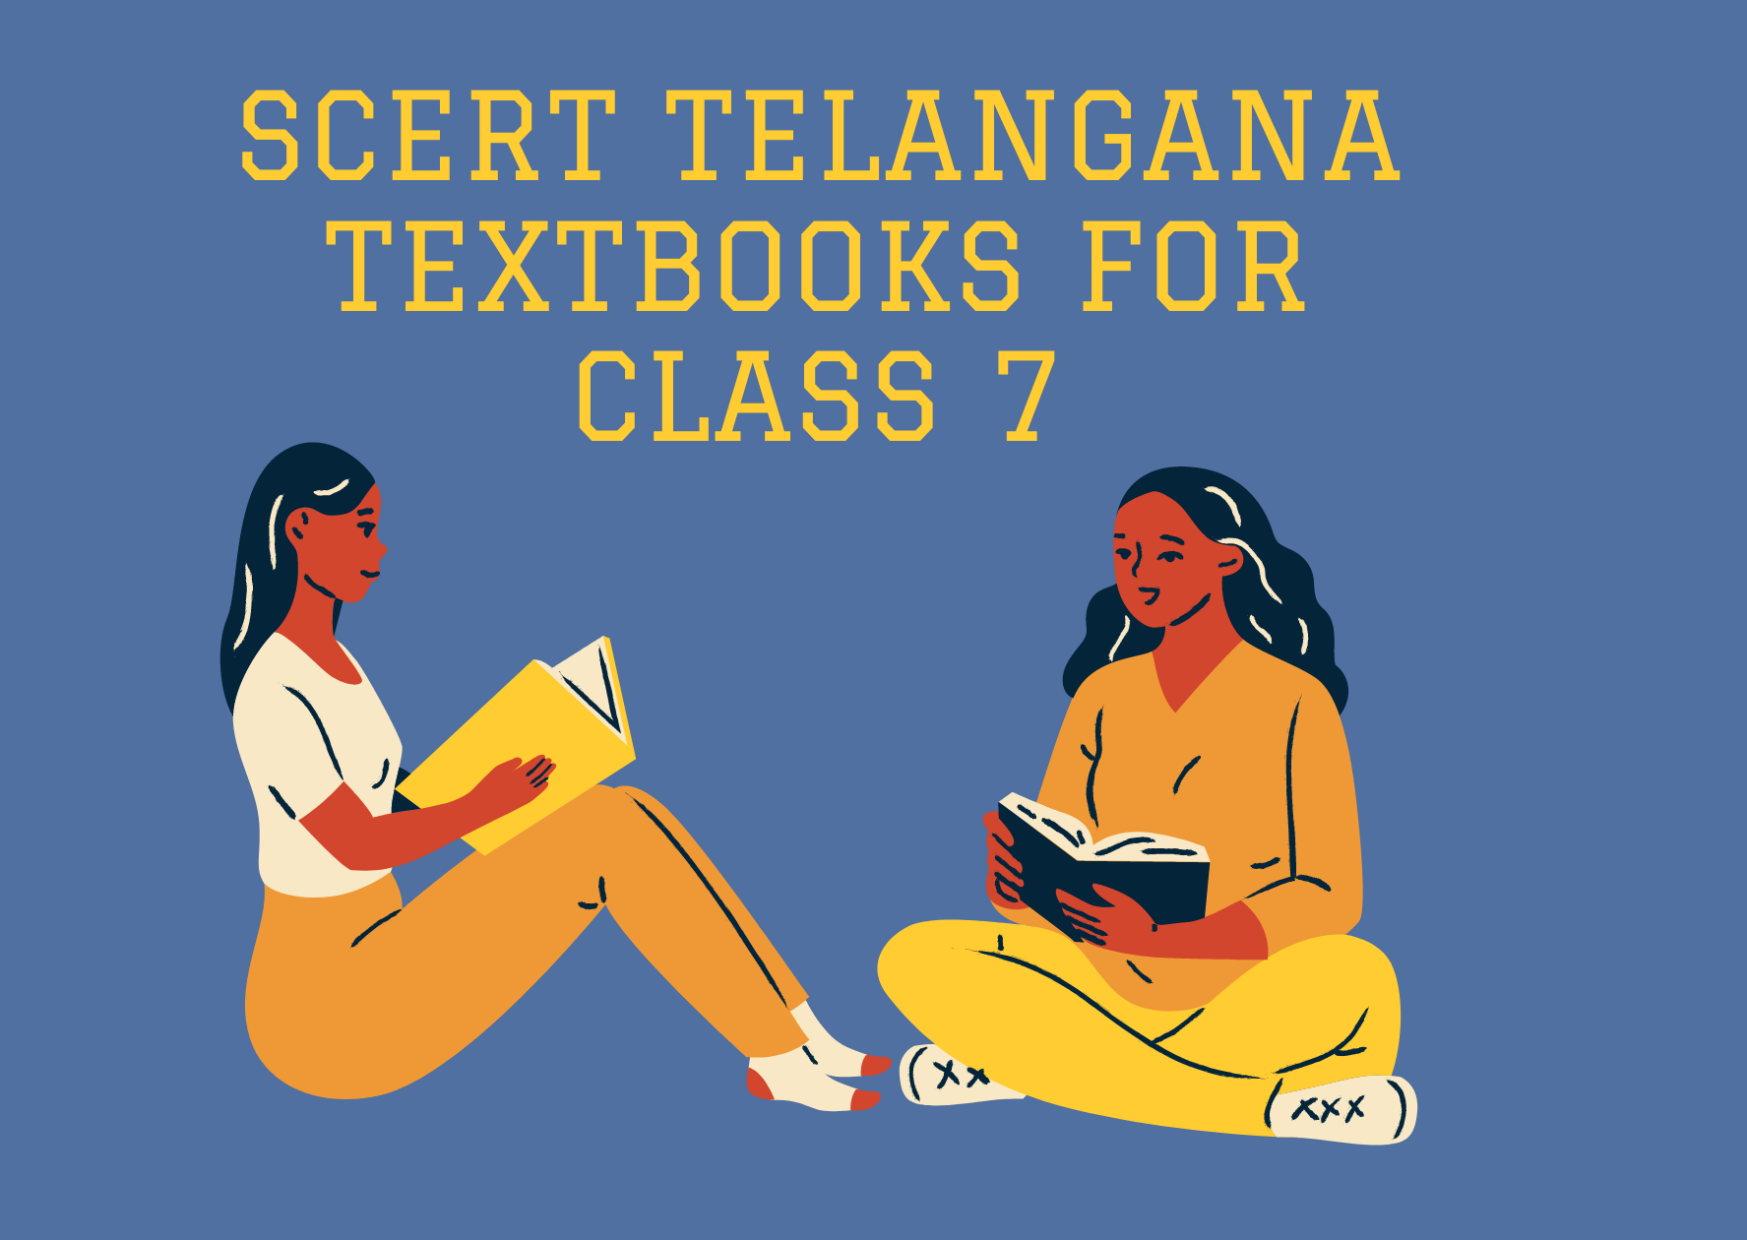 SCERT Telangana Textbooks for Class 7 Download